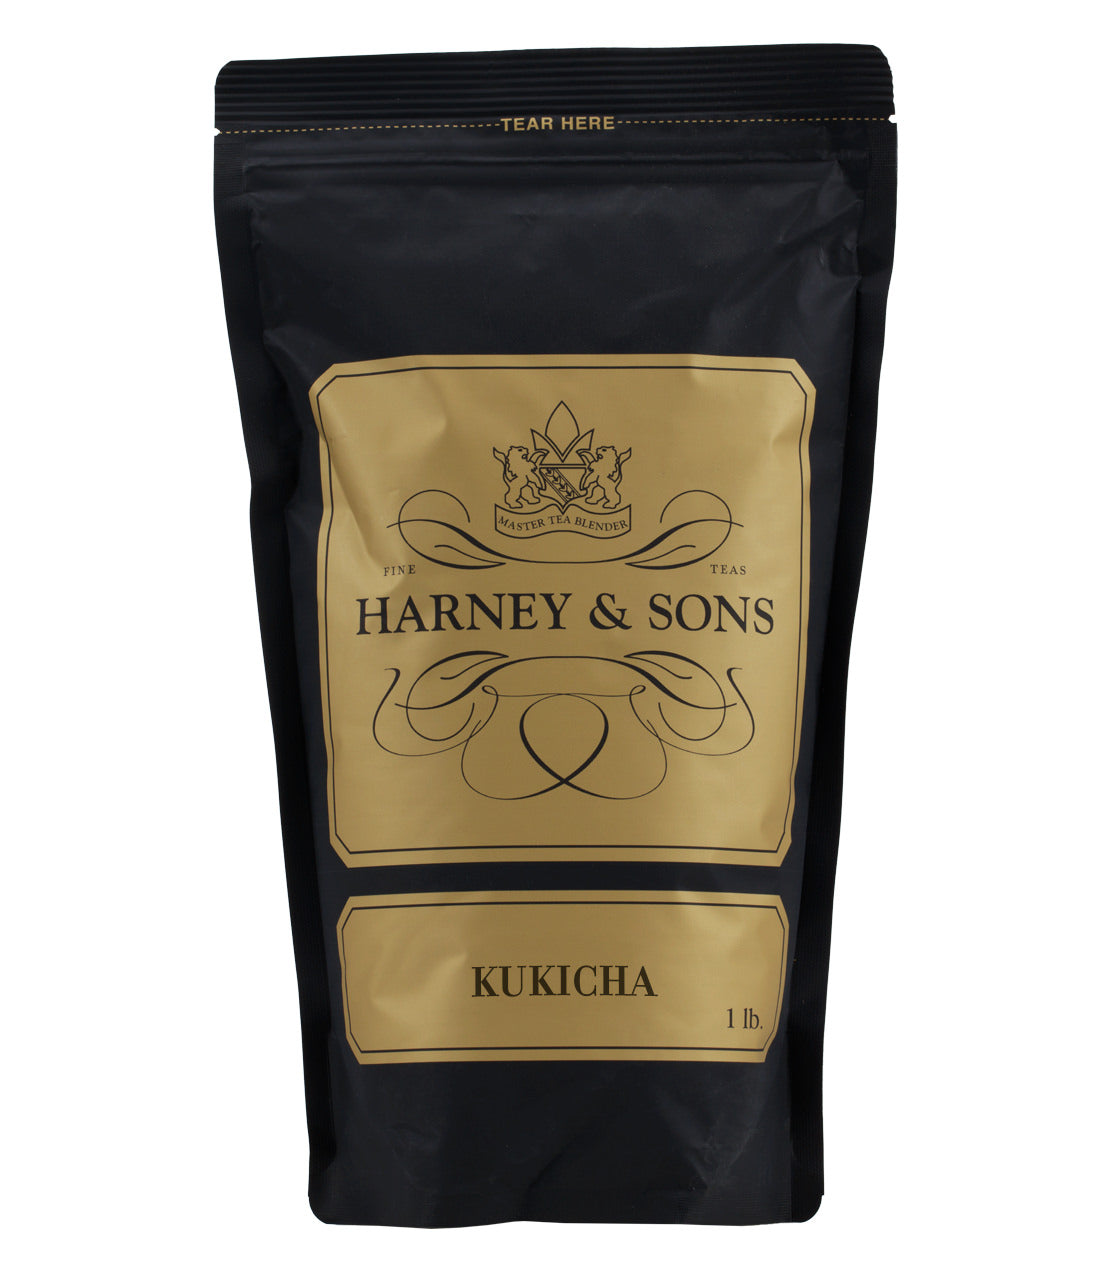 Kukicha - Loose 1 lb. Bag - Harney & Sons Fine Teas